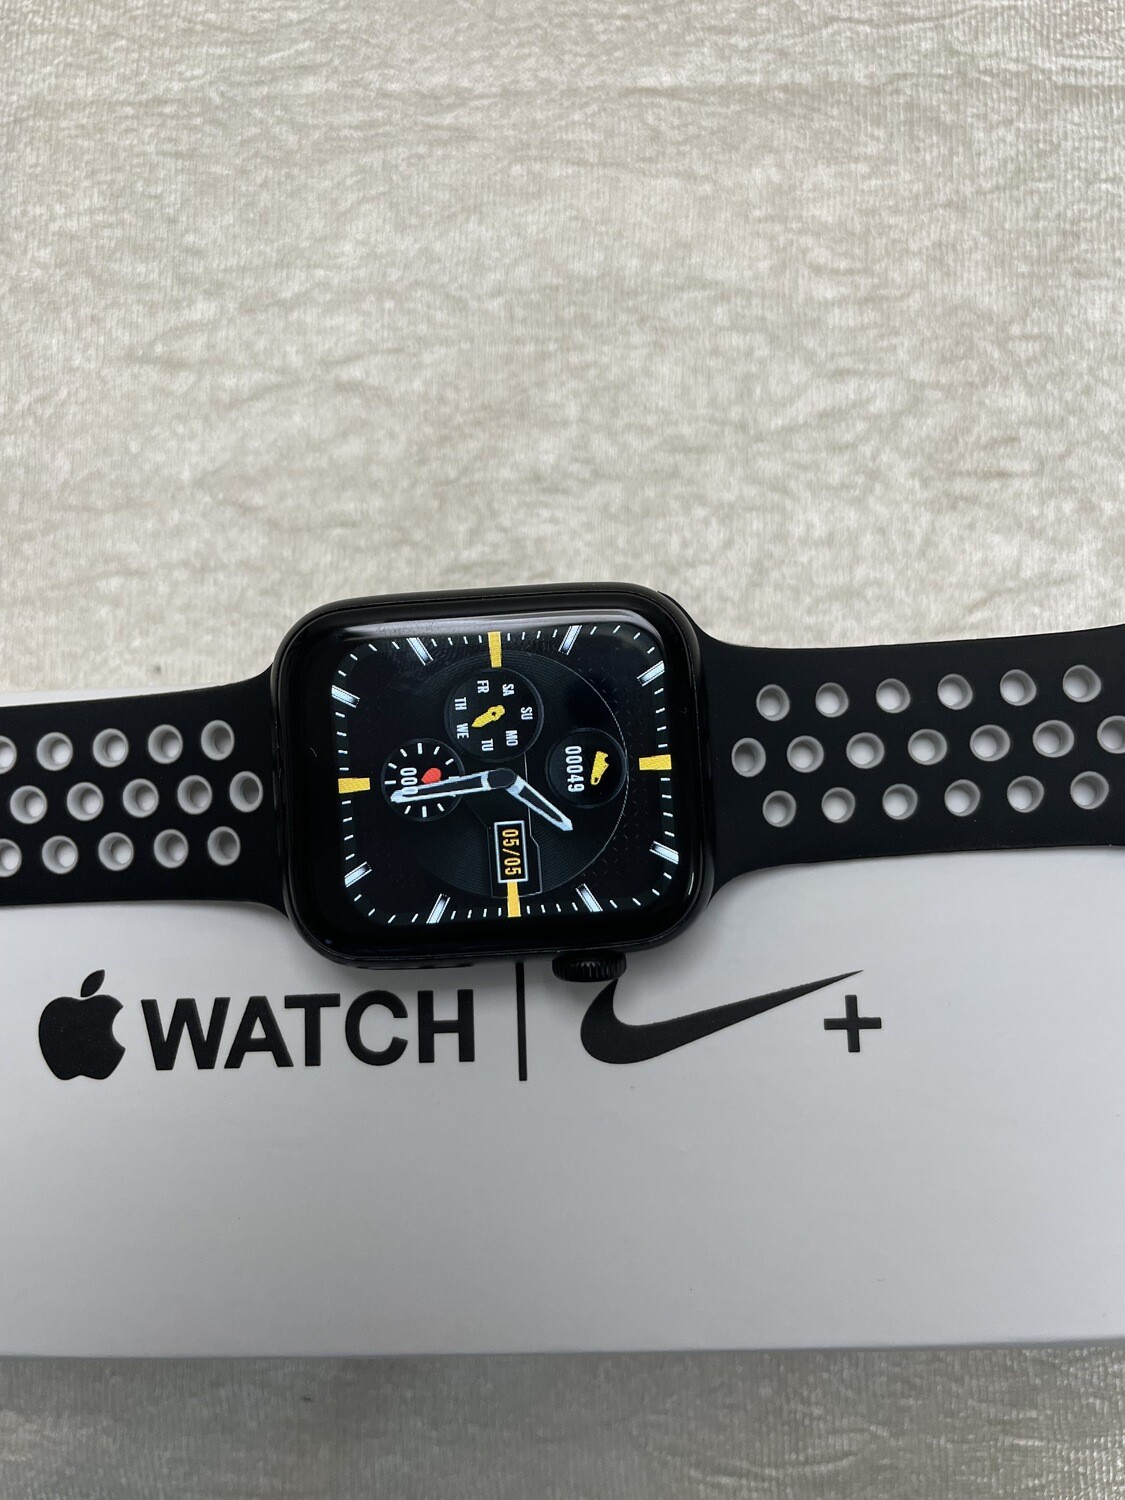 البيانات تفهم فخر  Apple Watch Series 6 Clone with Apple Logo 2021 Edition